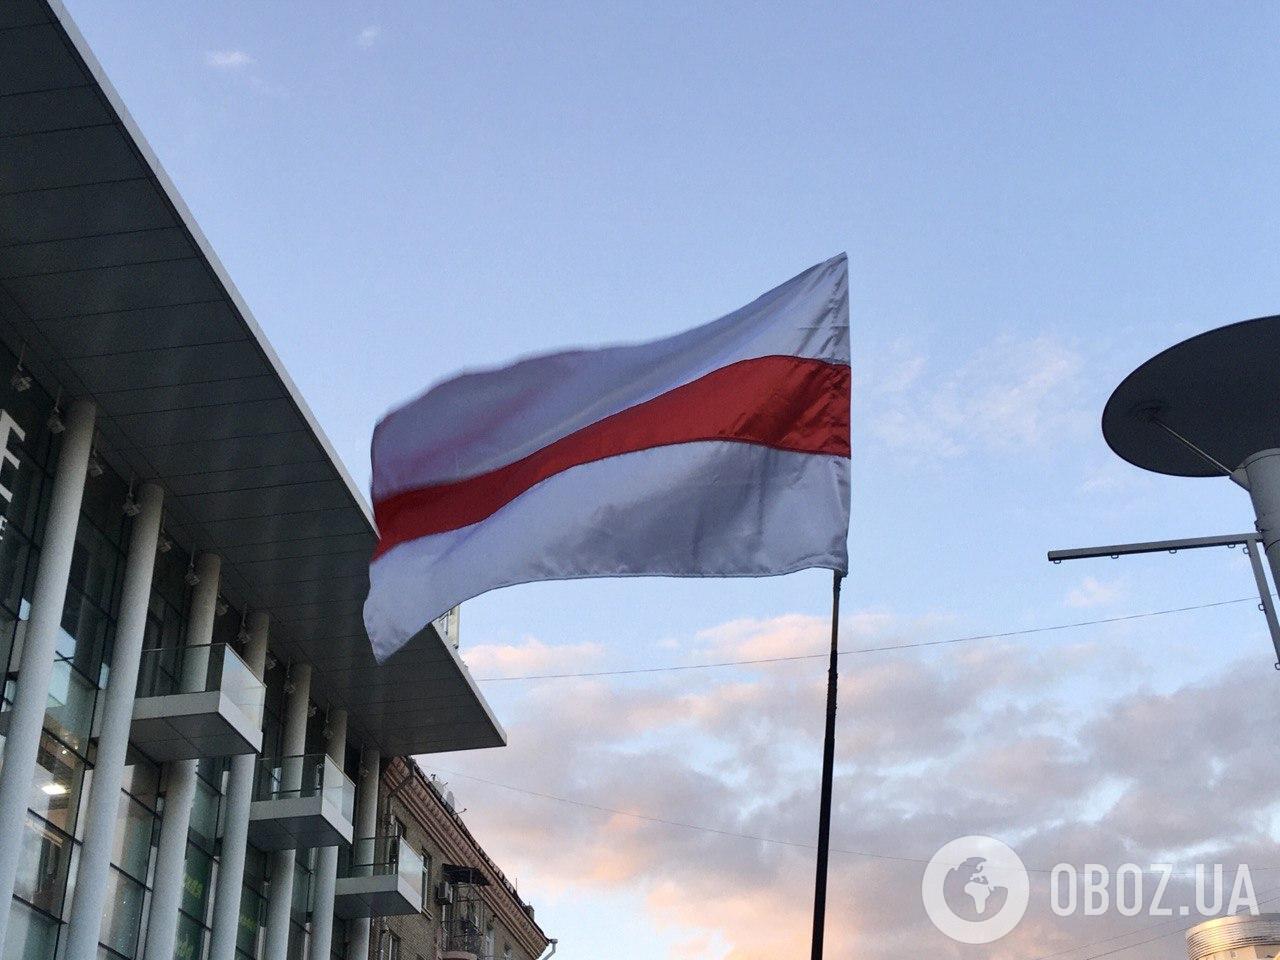 Бело-красно-белый флаг Беларуси